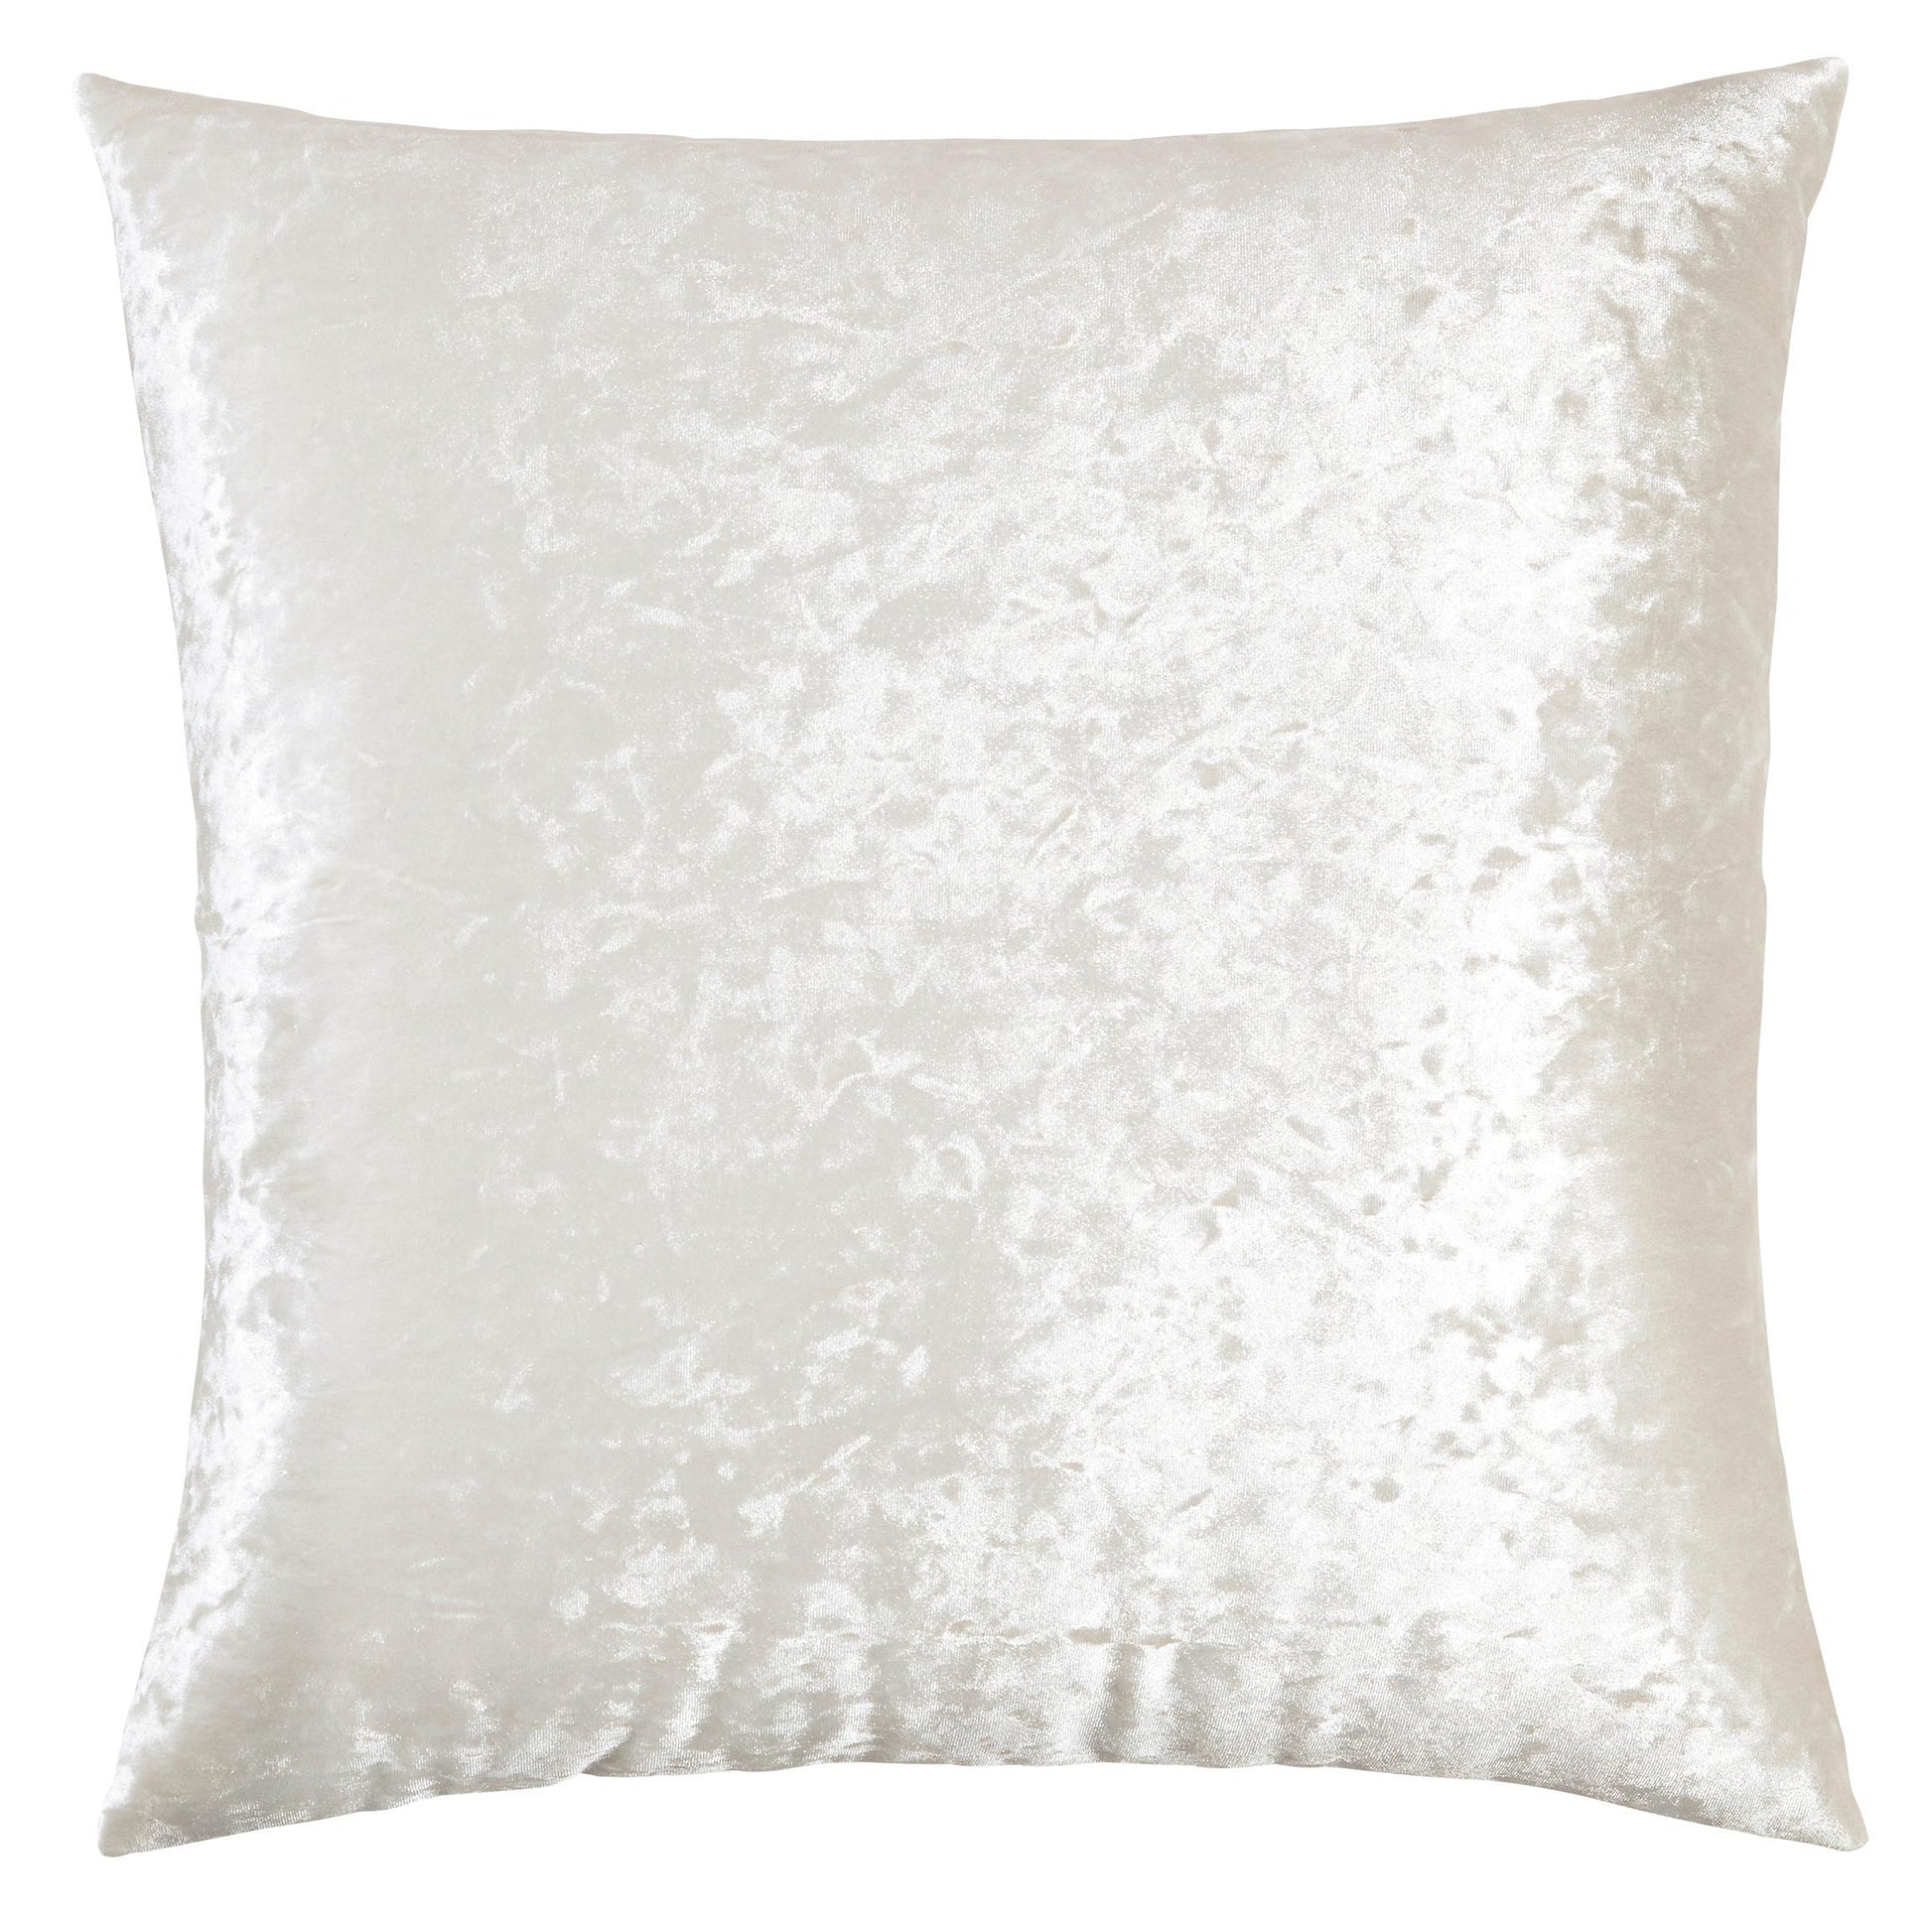 Signature Design by Ashley Decorative Pillows Decorative Pillows A1000862